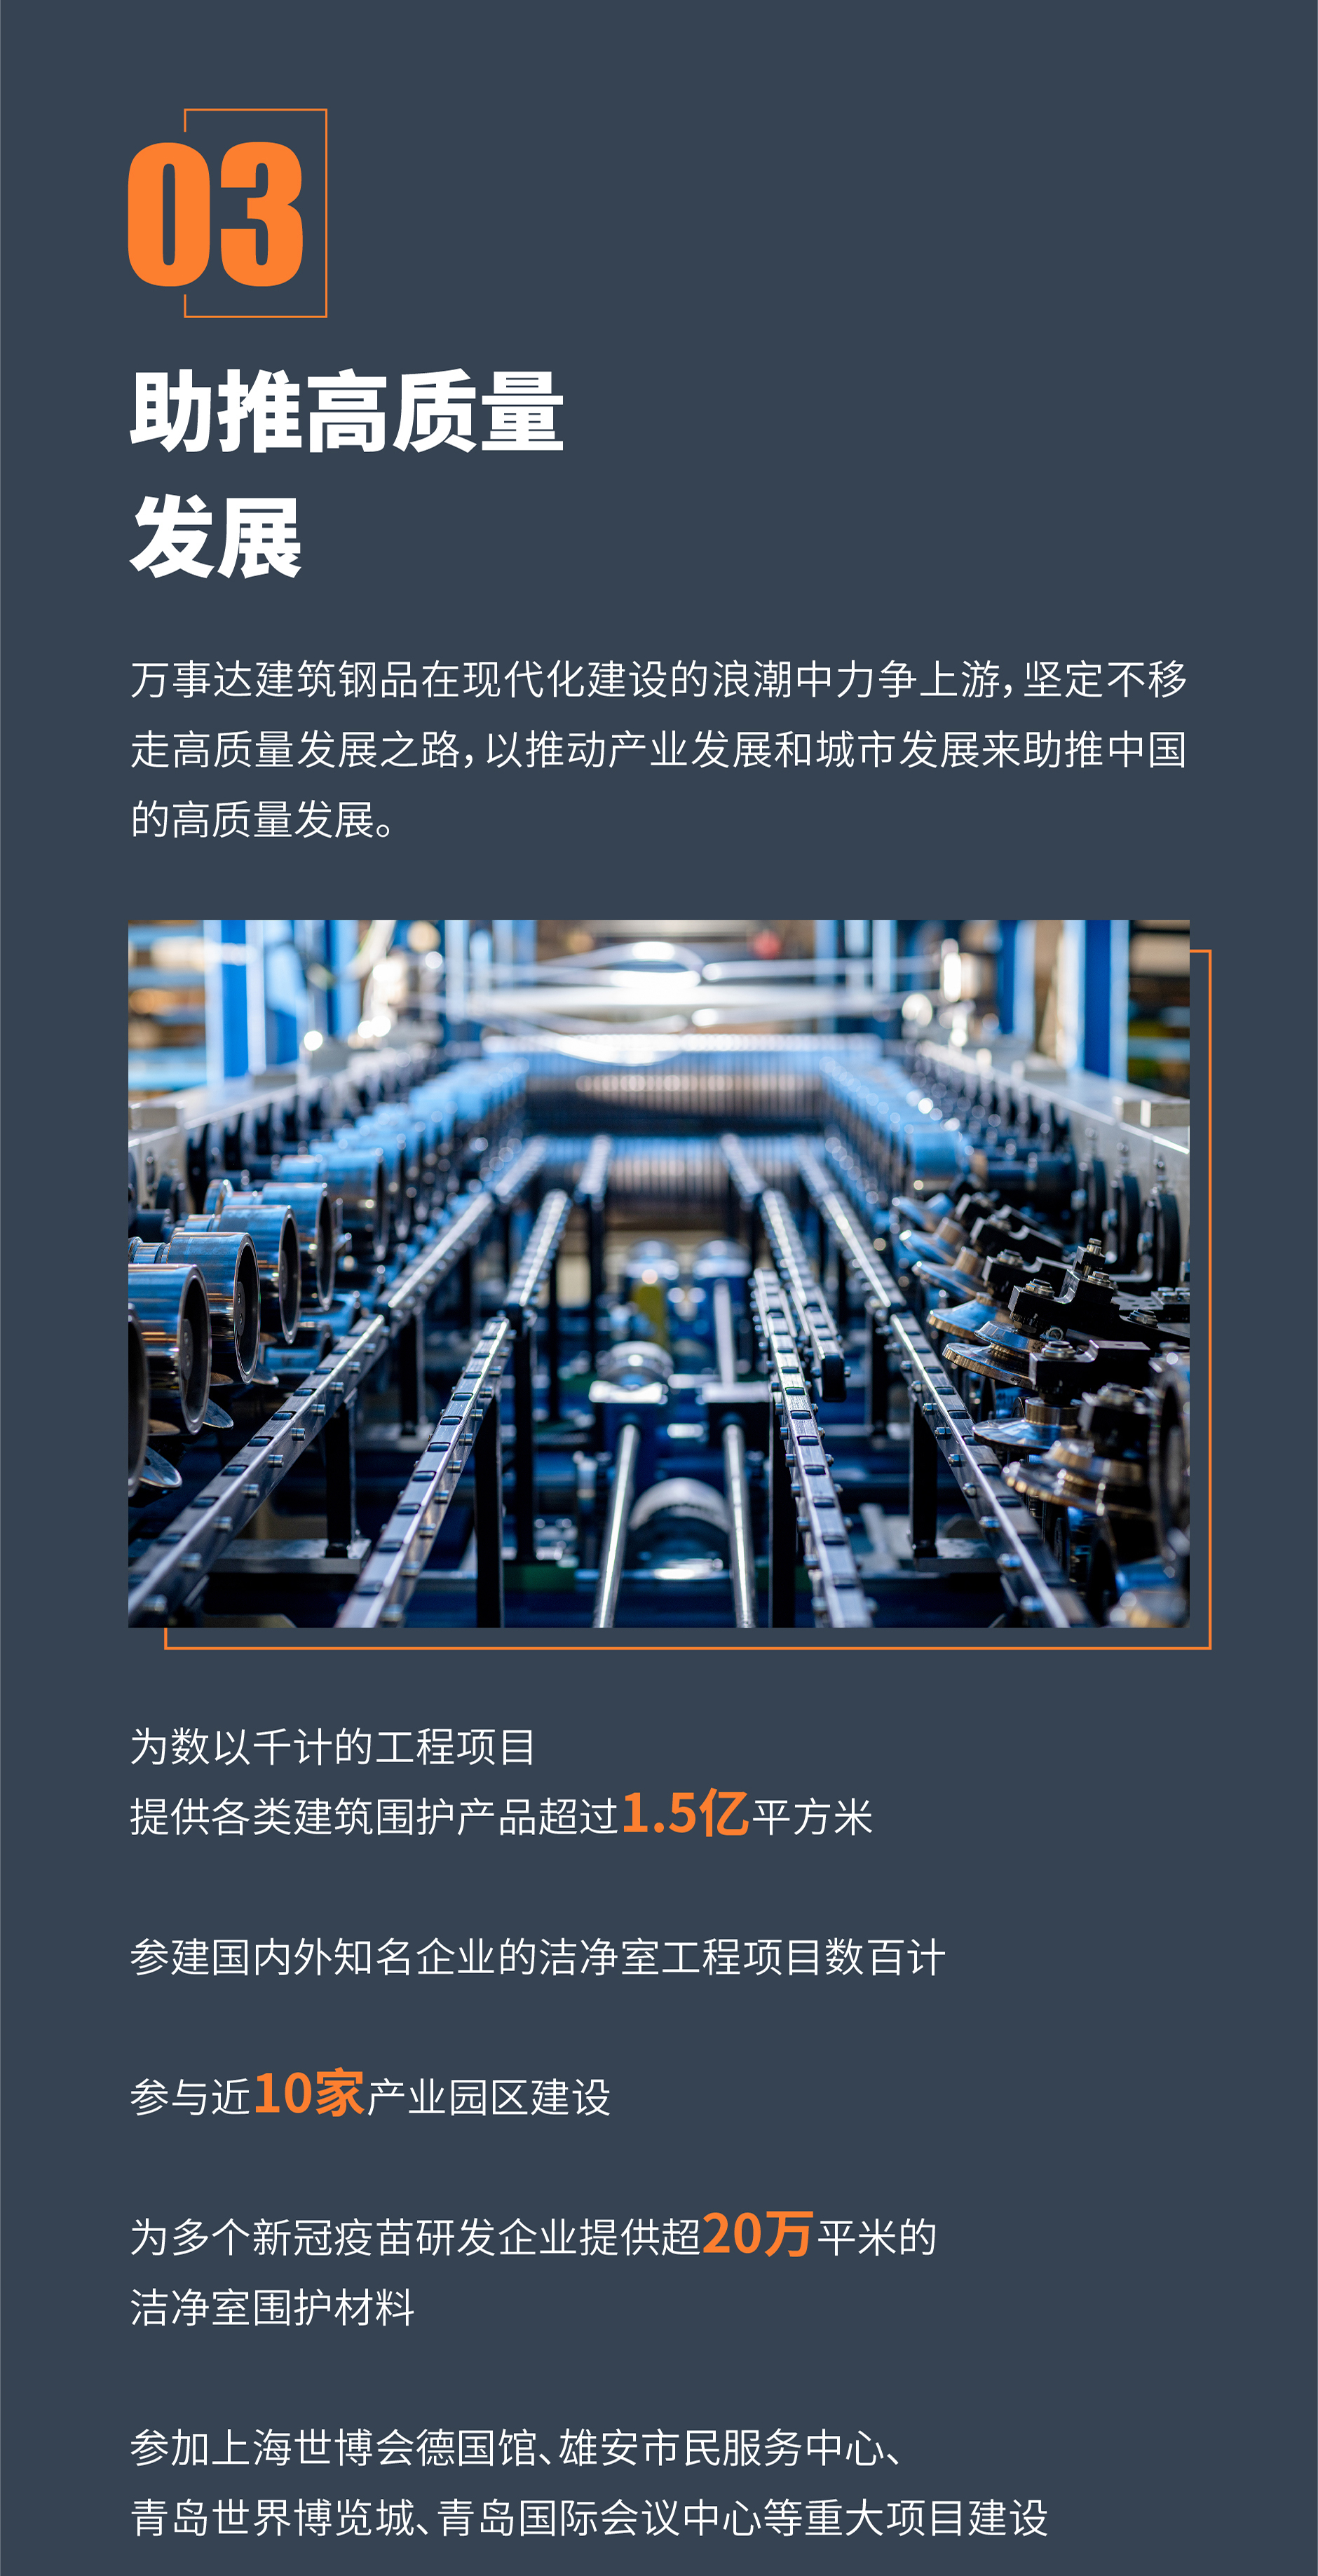 Wiskind Steel Building Co., Ltd.s first CSR report(图9)